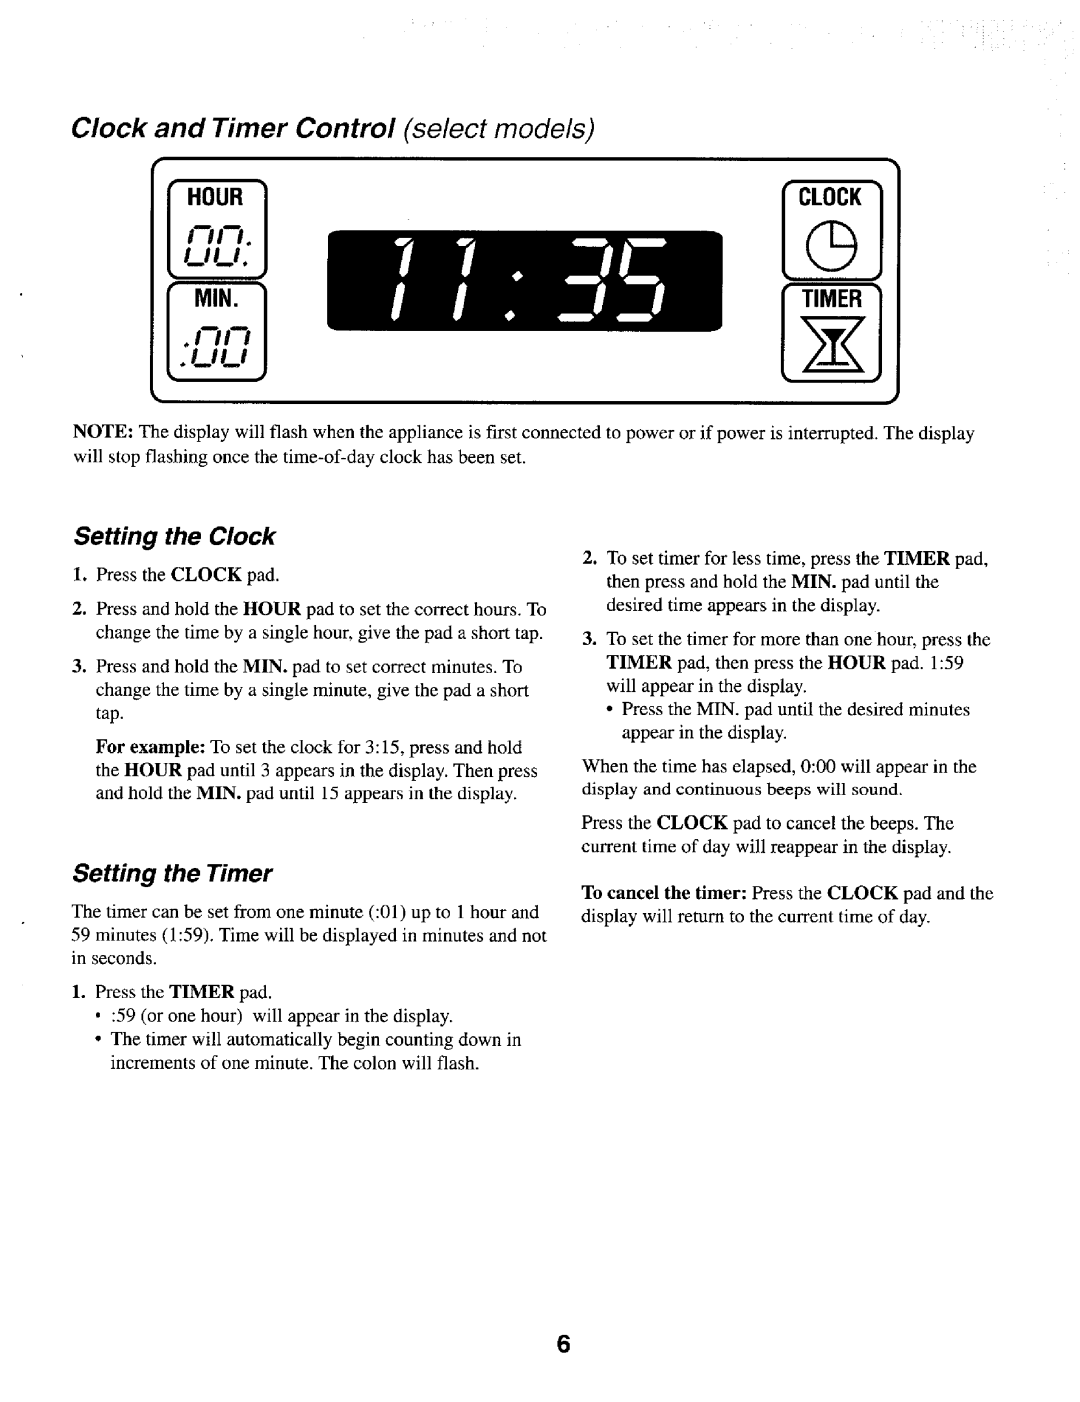 Maytag MER4530 warranty Clock and Timer Control select models, Hourclock, I--It--I, I. nn 